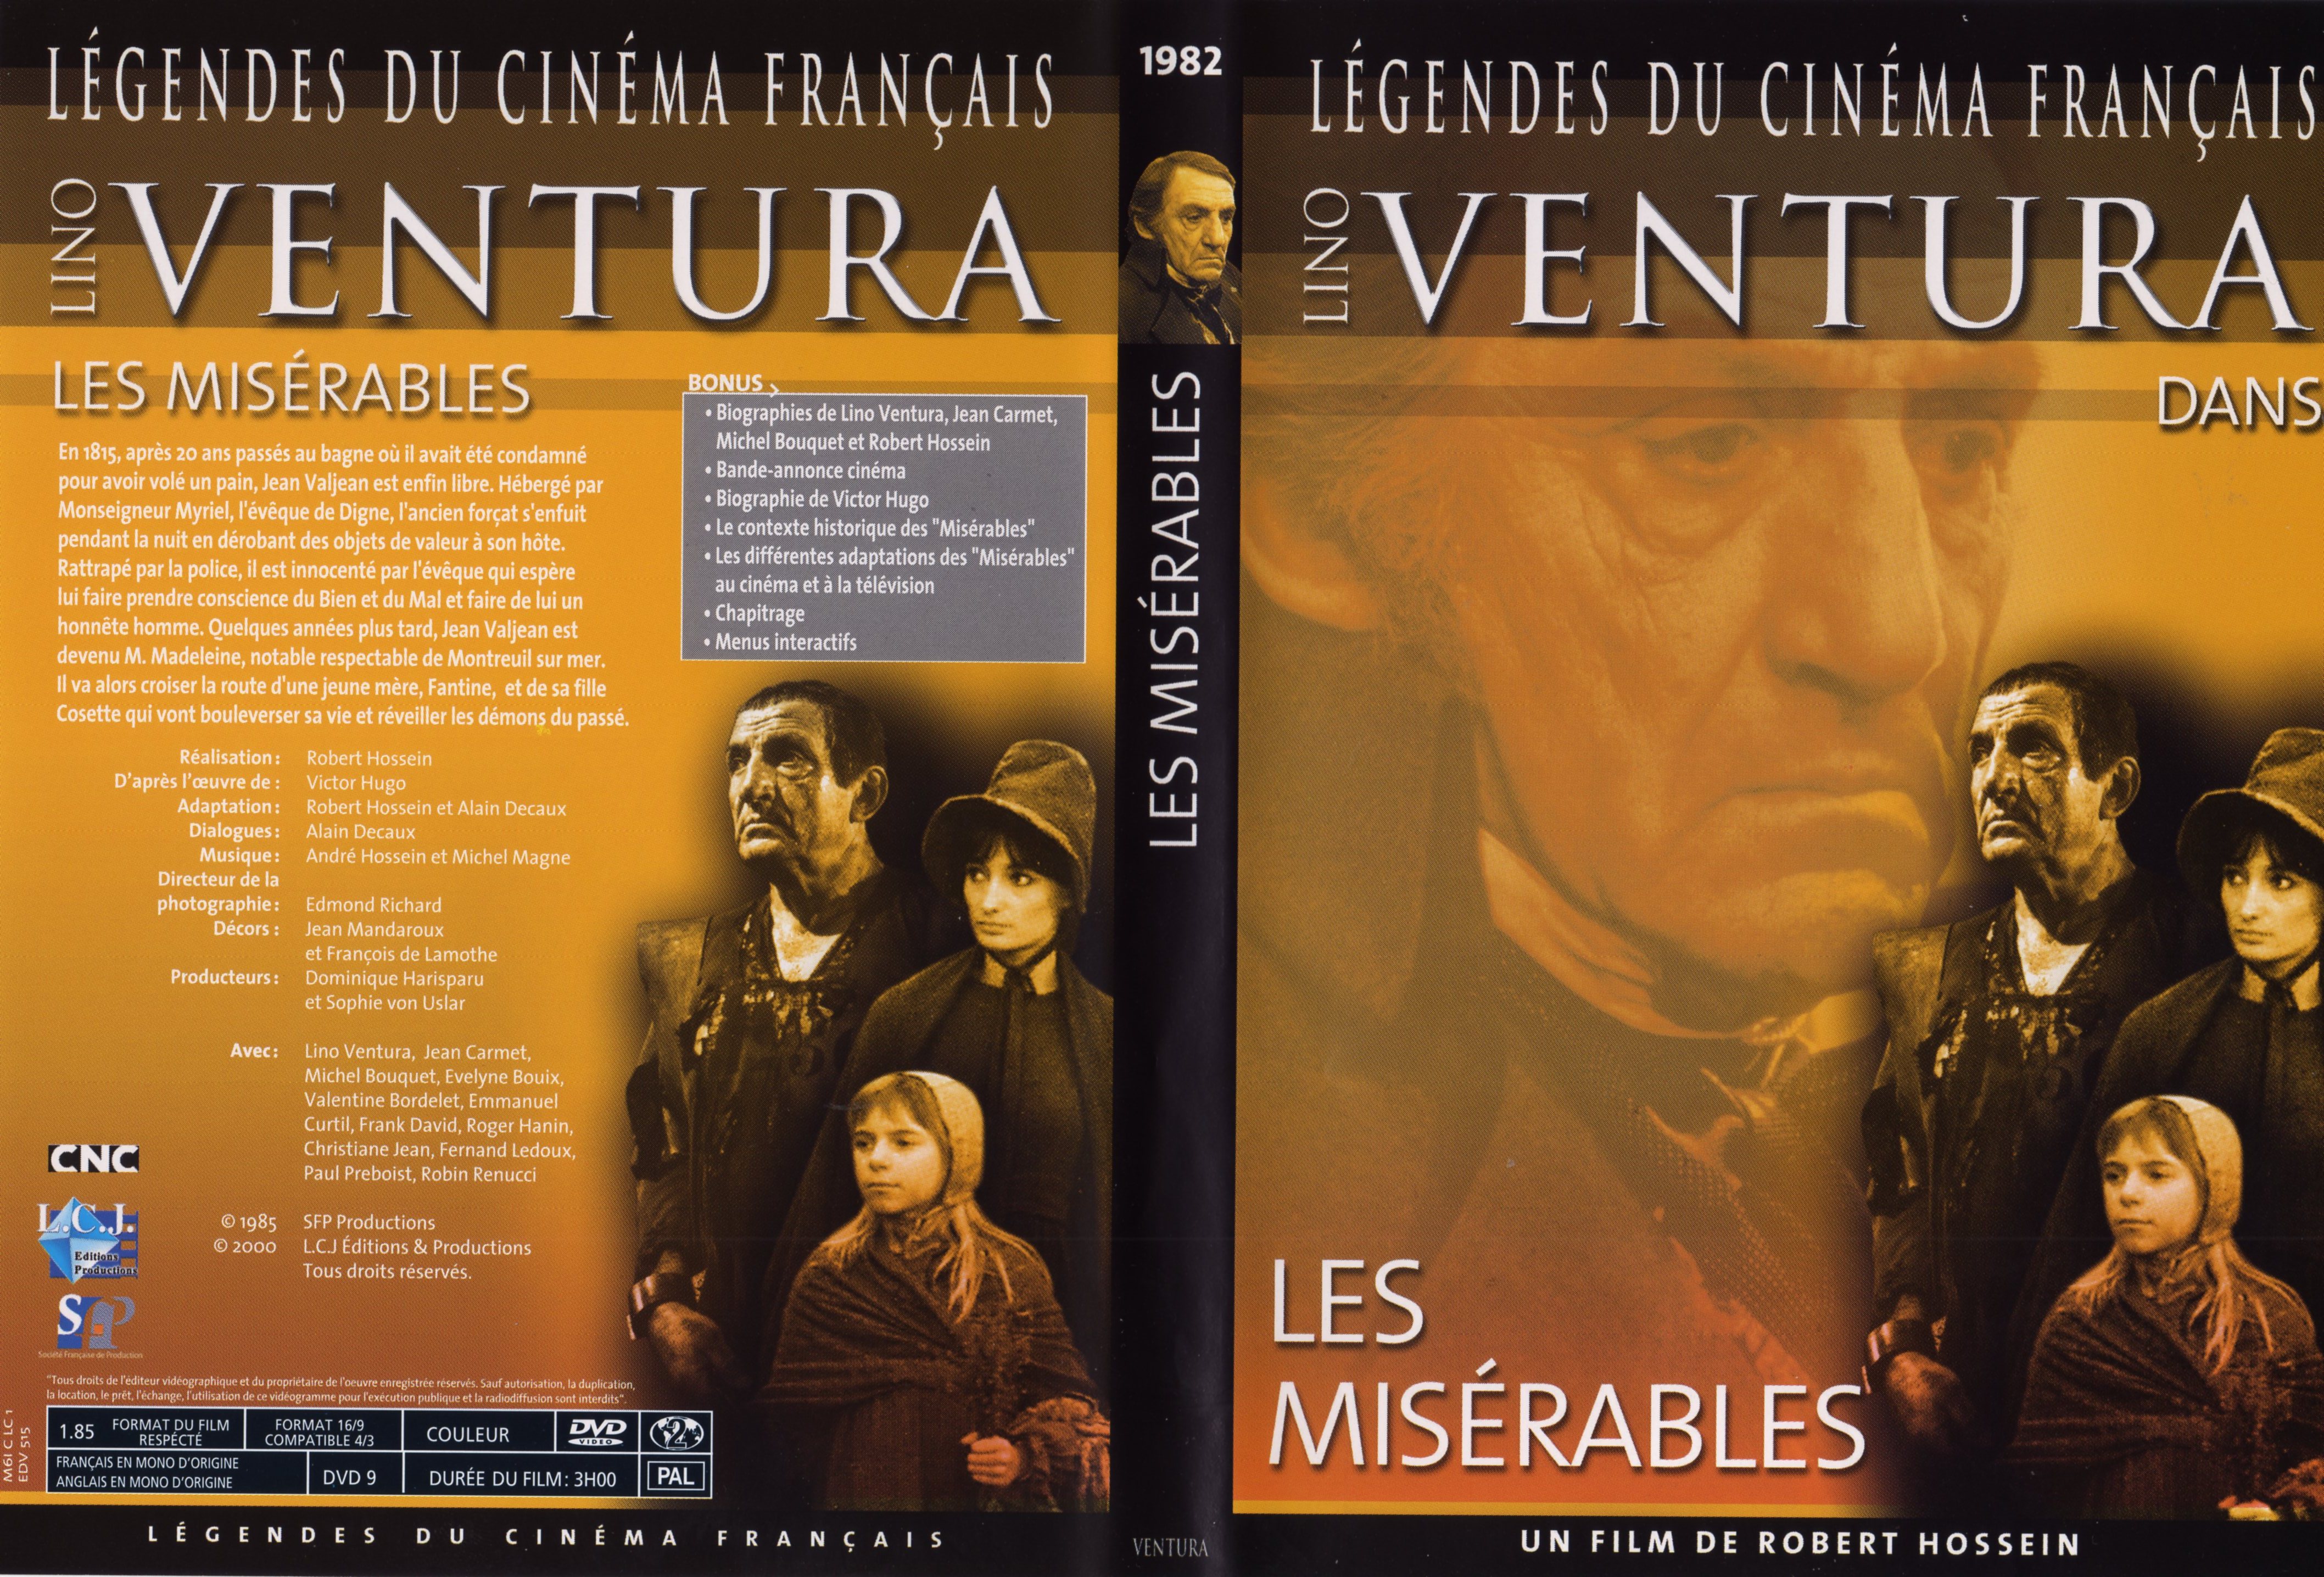 Jaquette DVD Les misrables (Ventura) v3